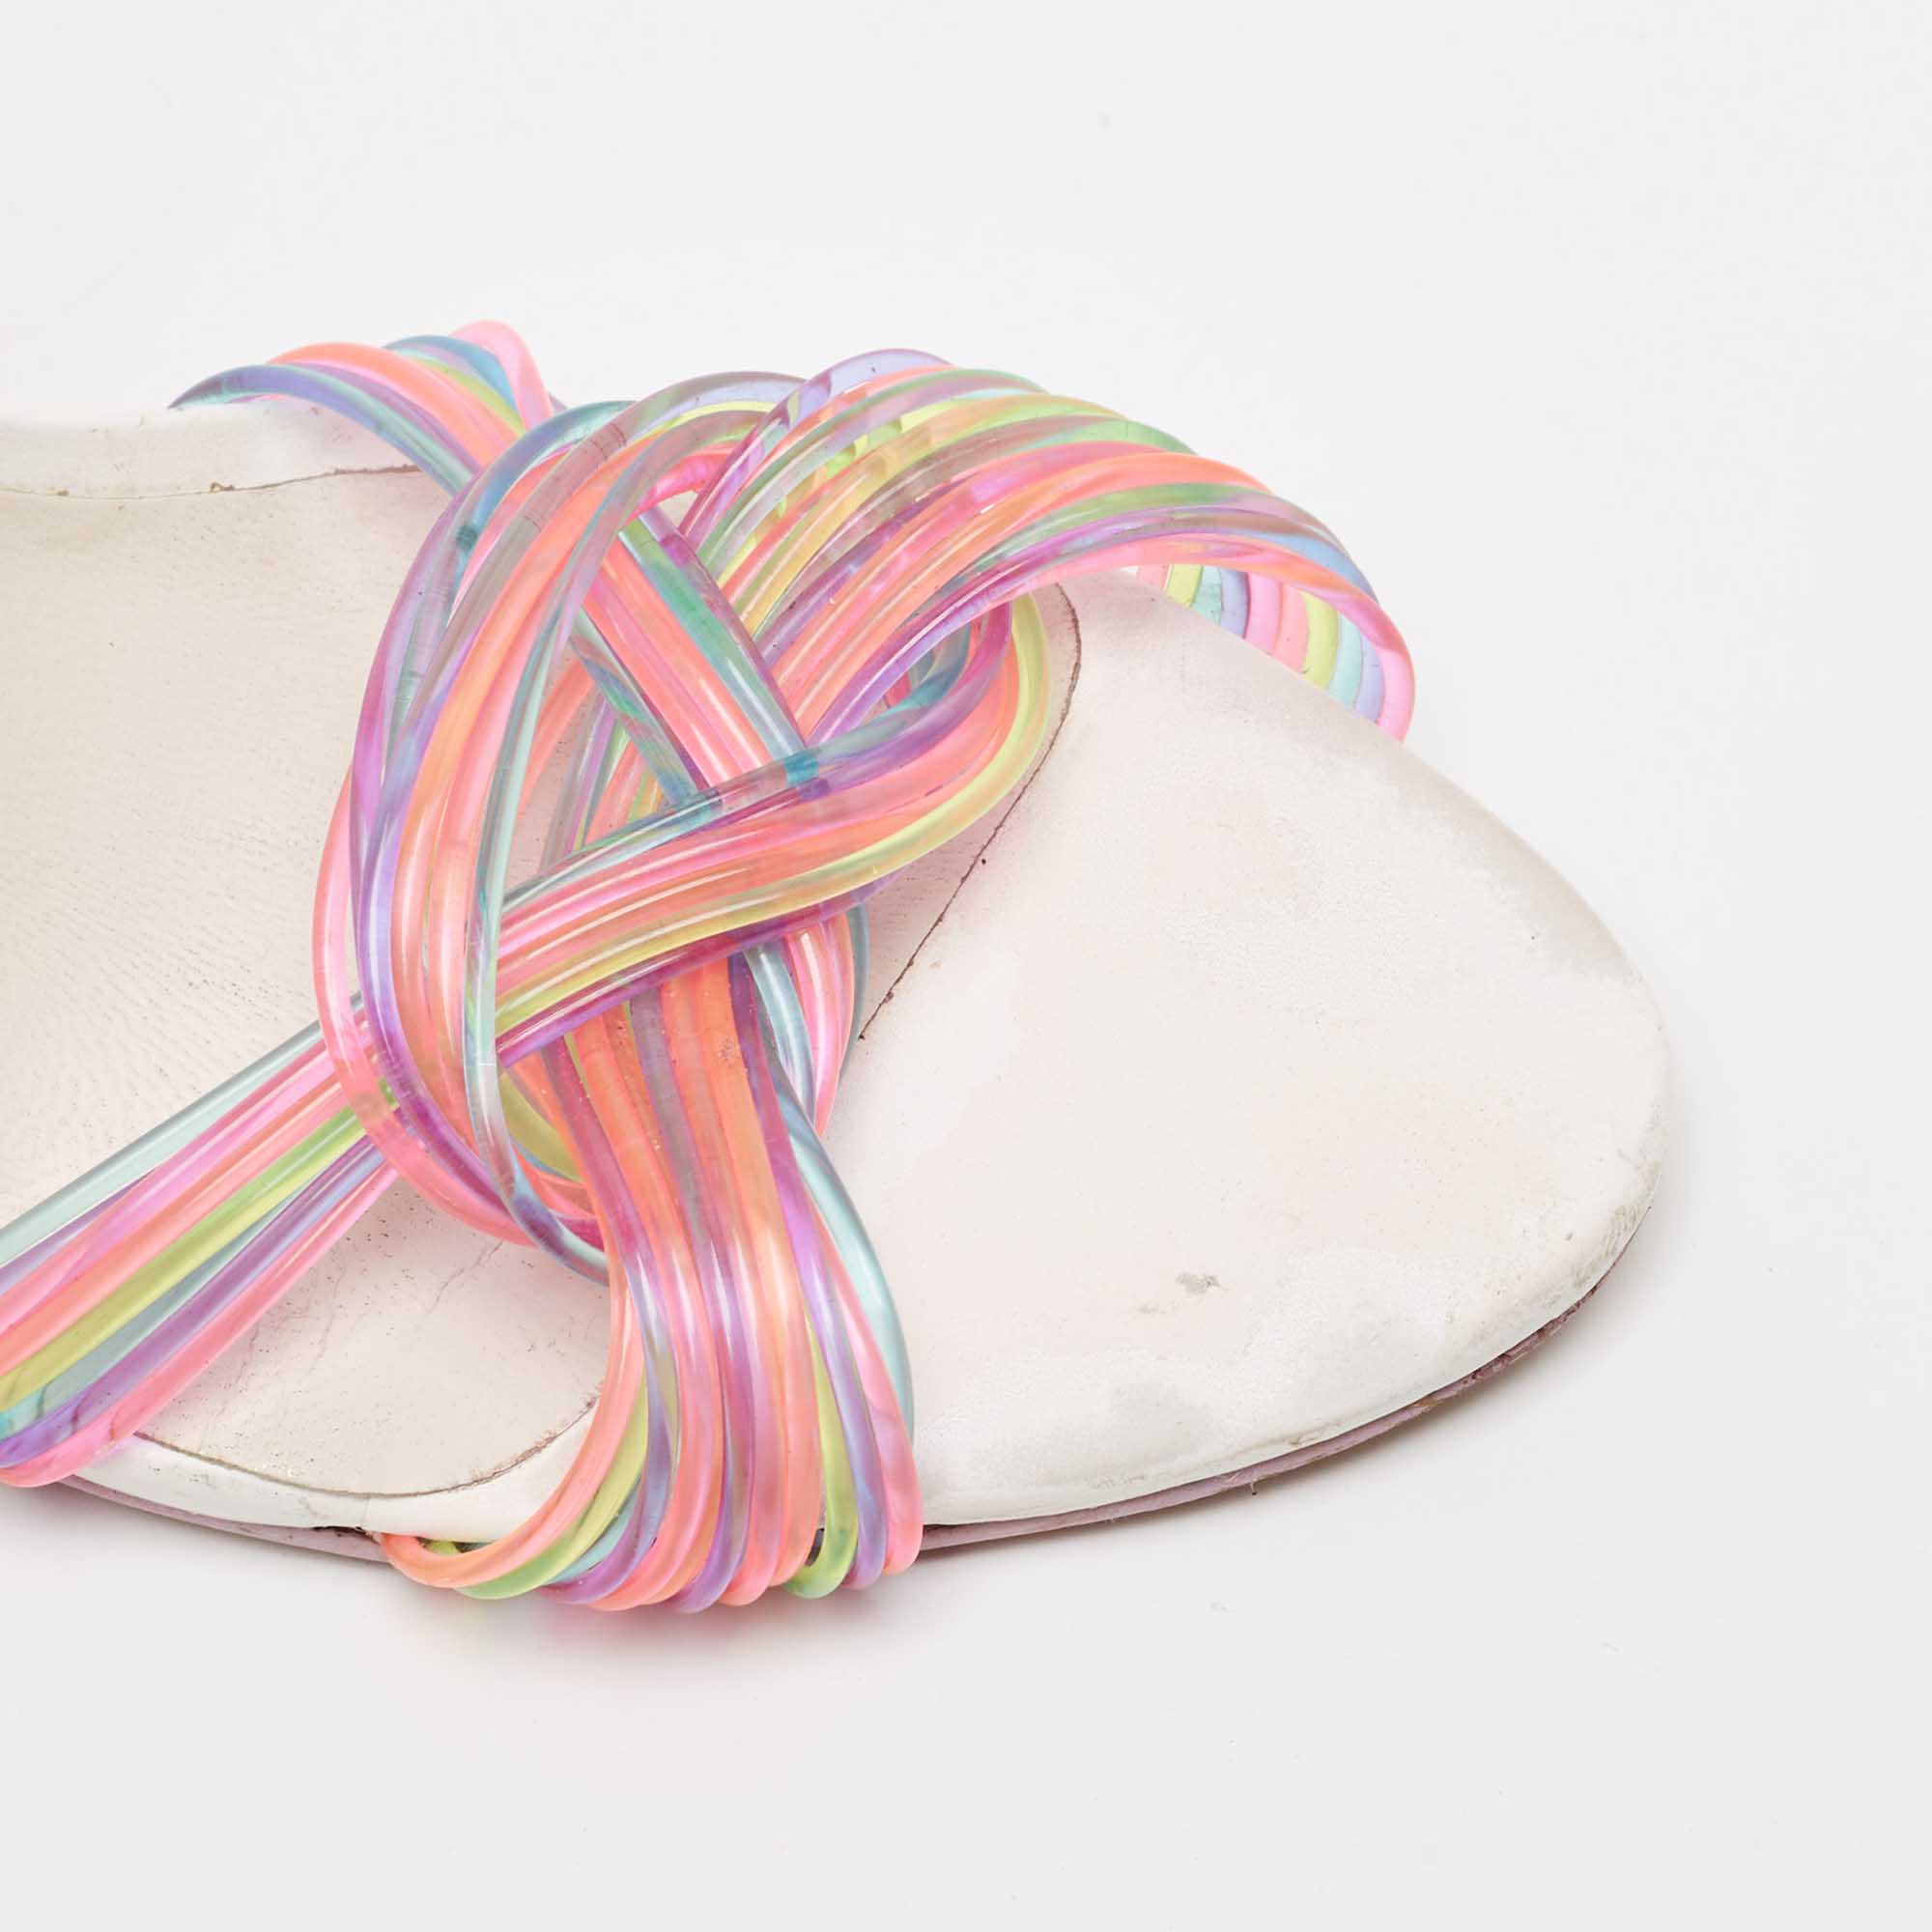 Sophia Webster Multicolor PVC Coralie Ankle Strap Sandals Size 38.5